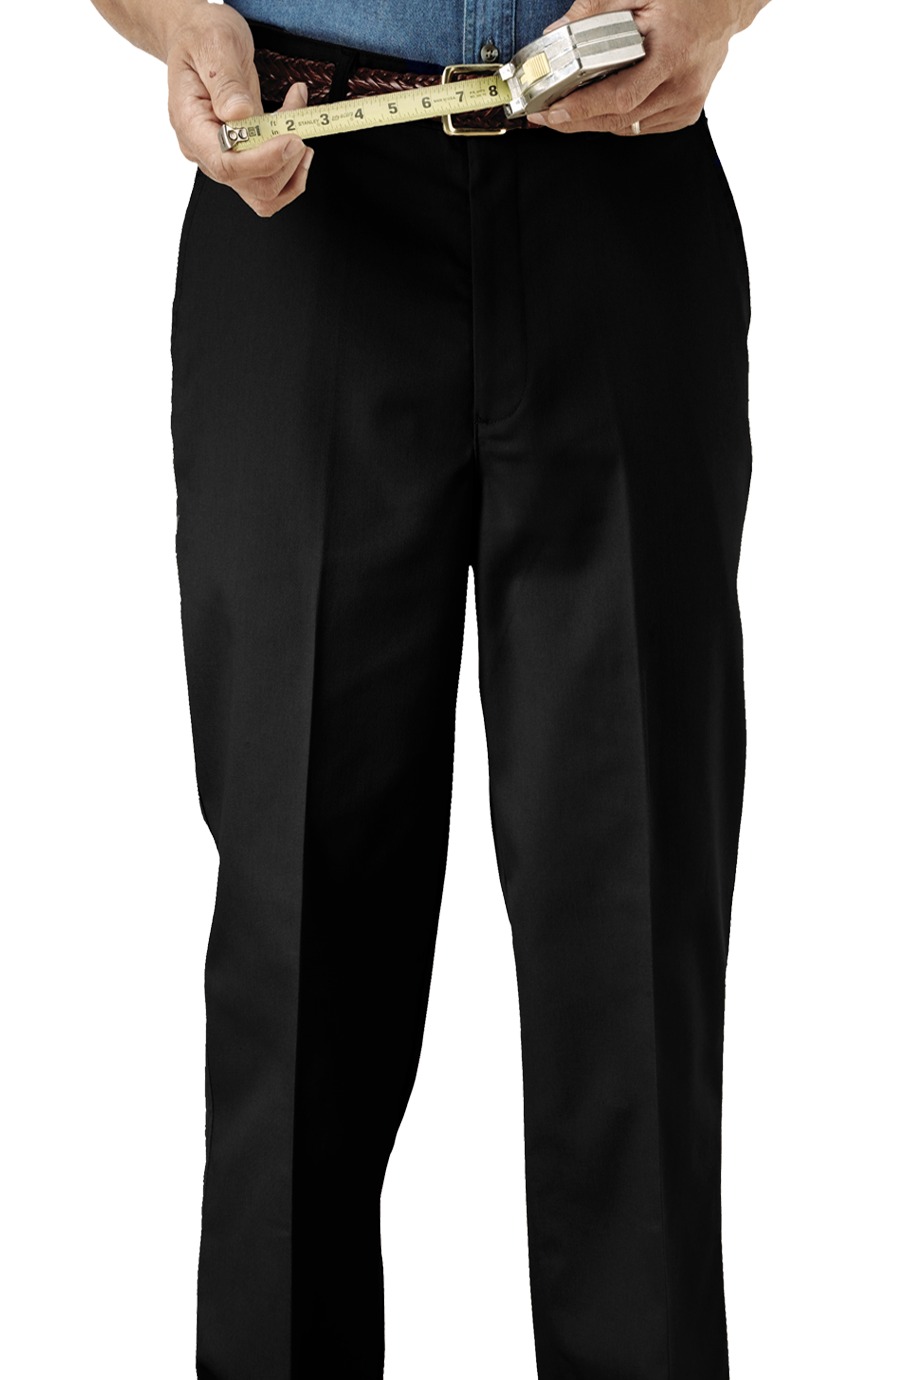 Edwards Garment 2577 - Men's Utility Flat Front Pant